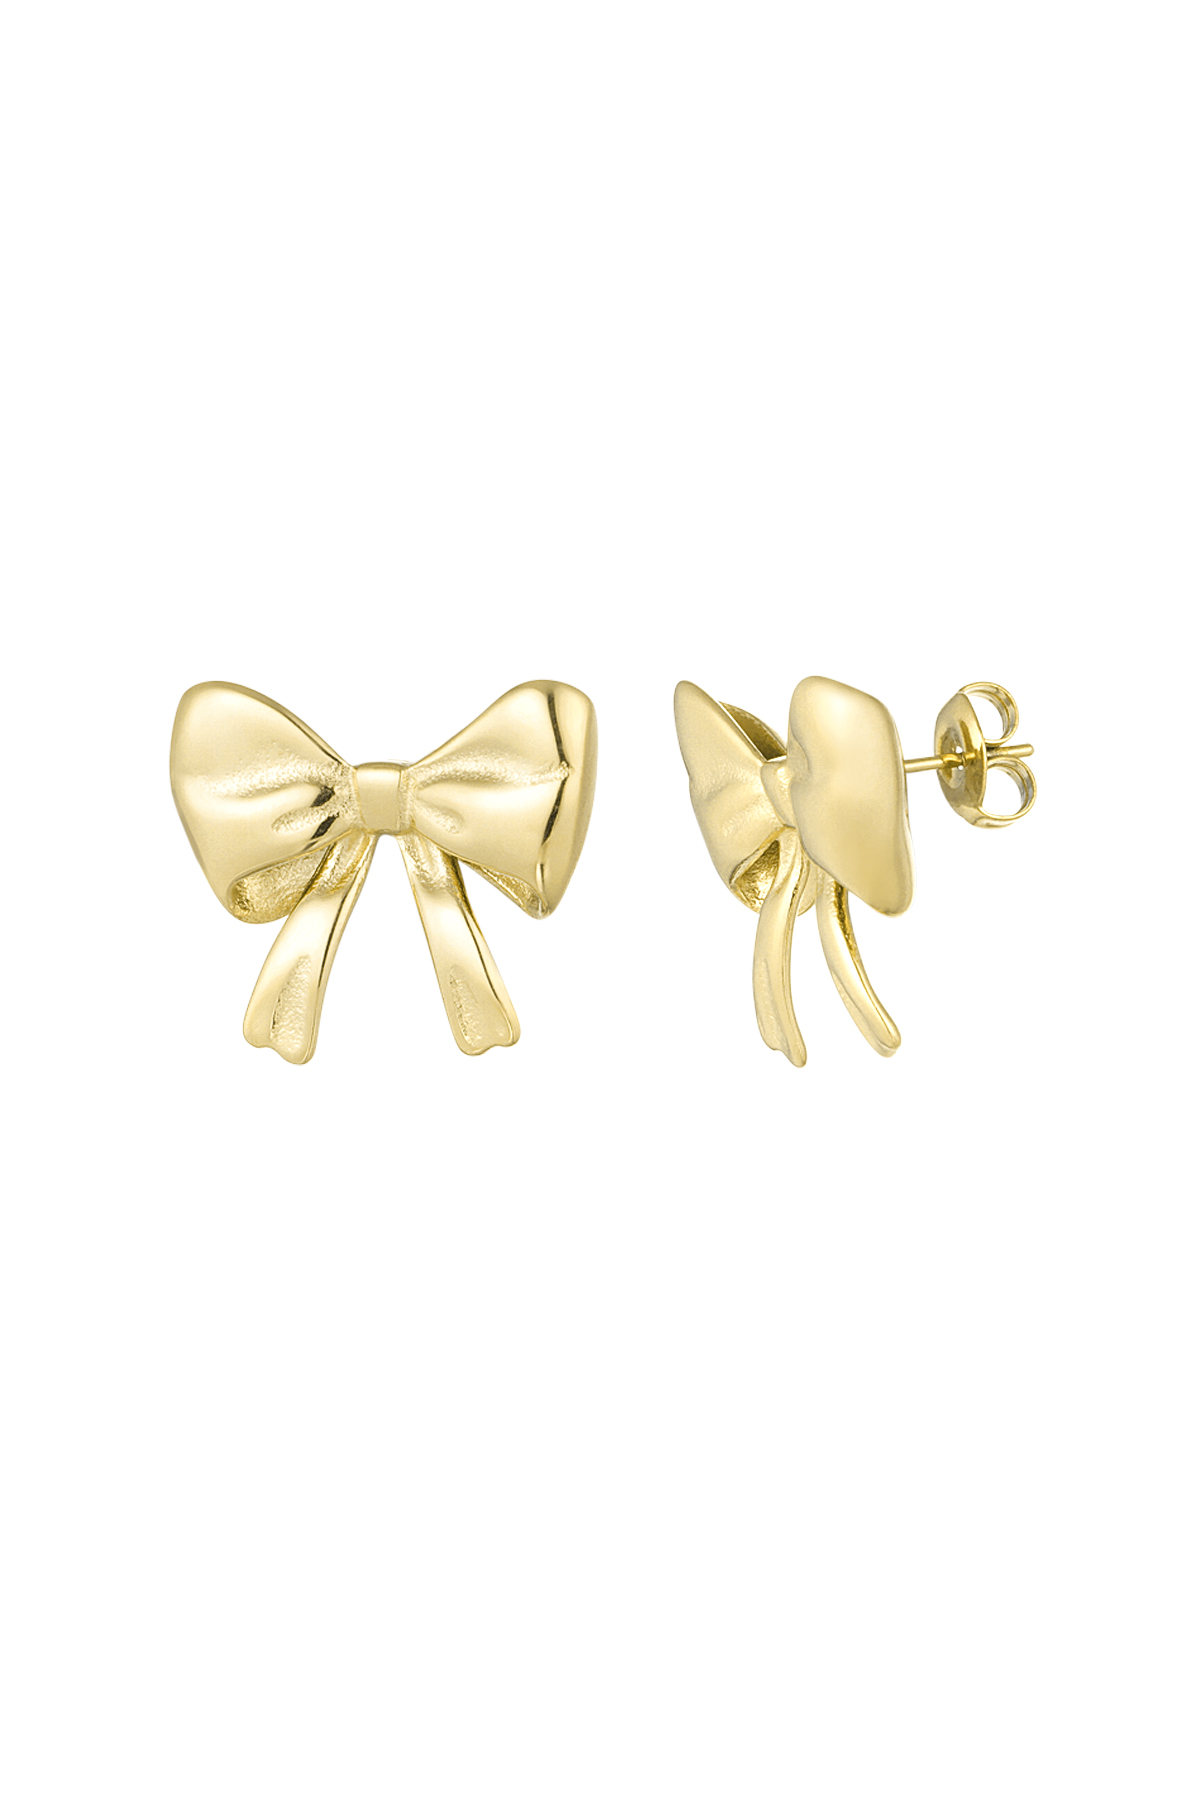 Cute bow earrings - gold  h5 